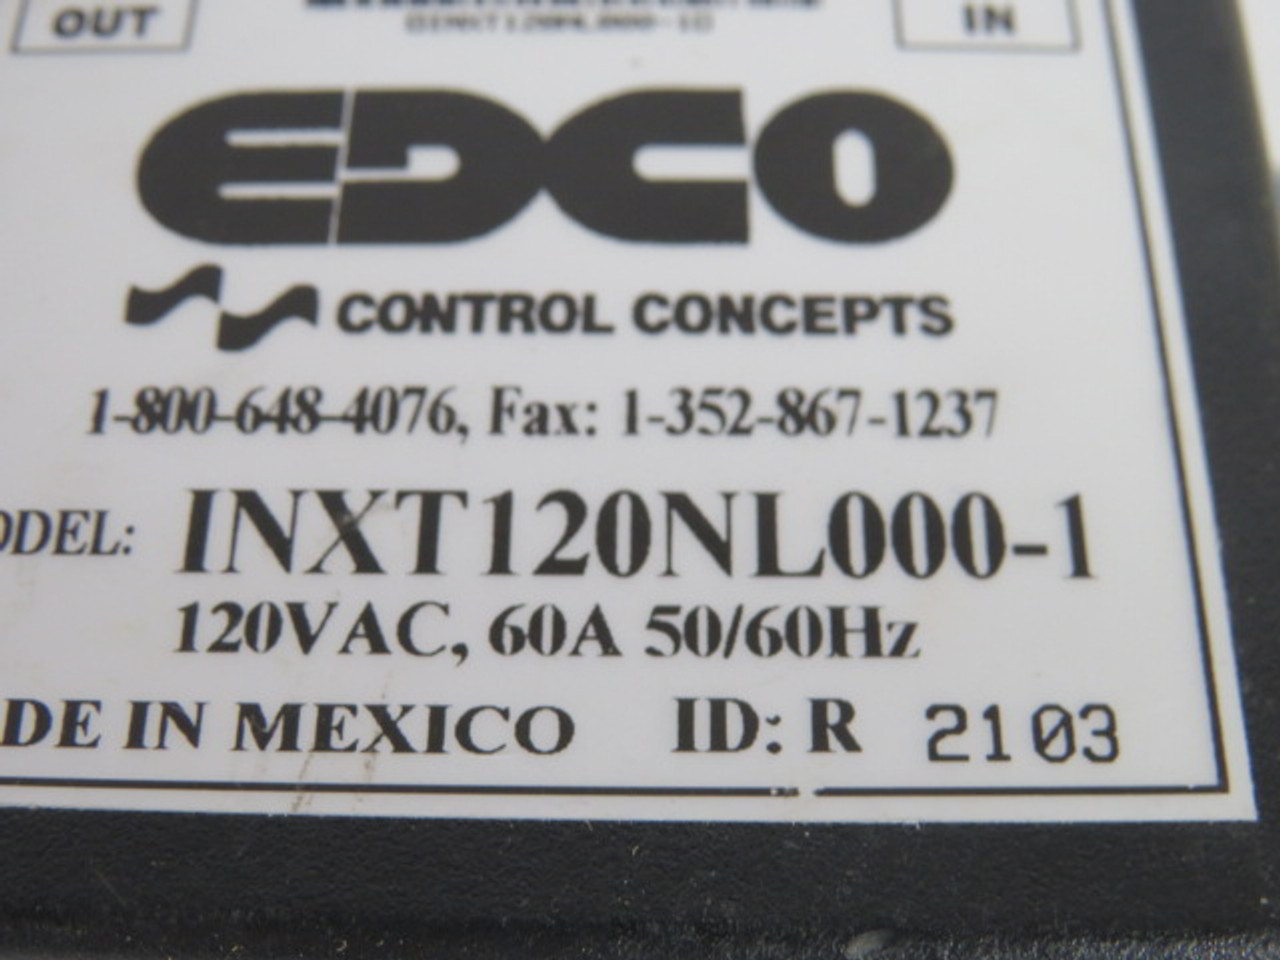 Edco INXT120NL000-1 Surge Protector 120VAC 60A 50/60HZ USED